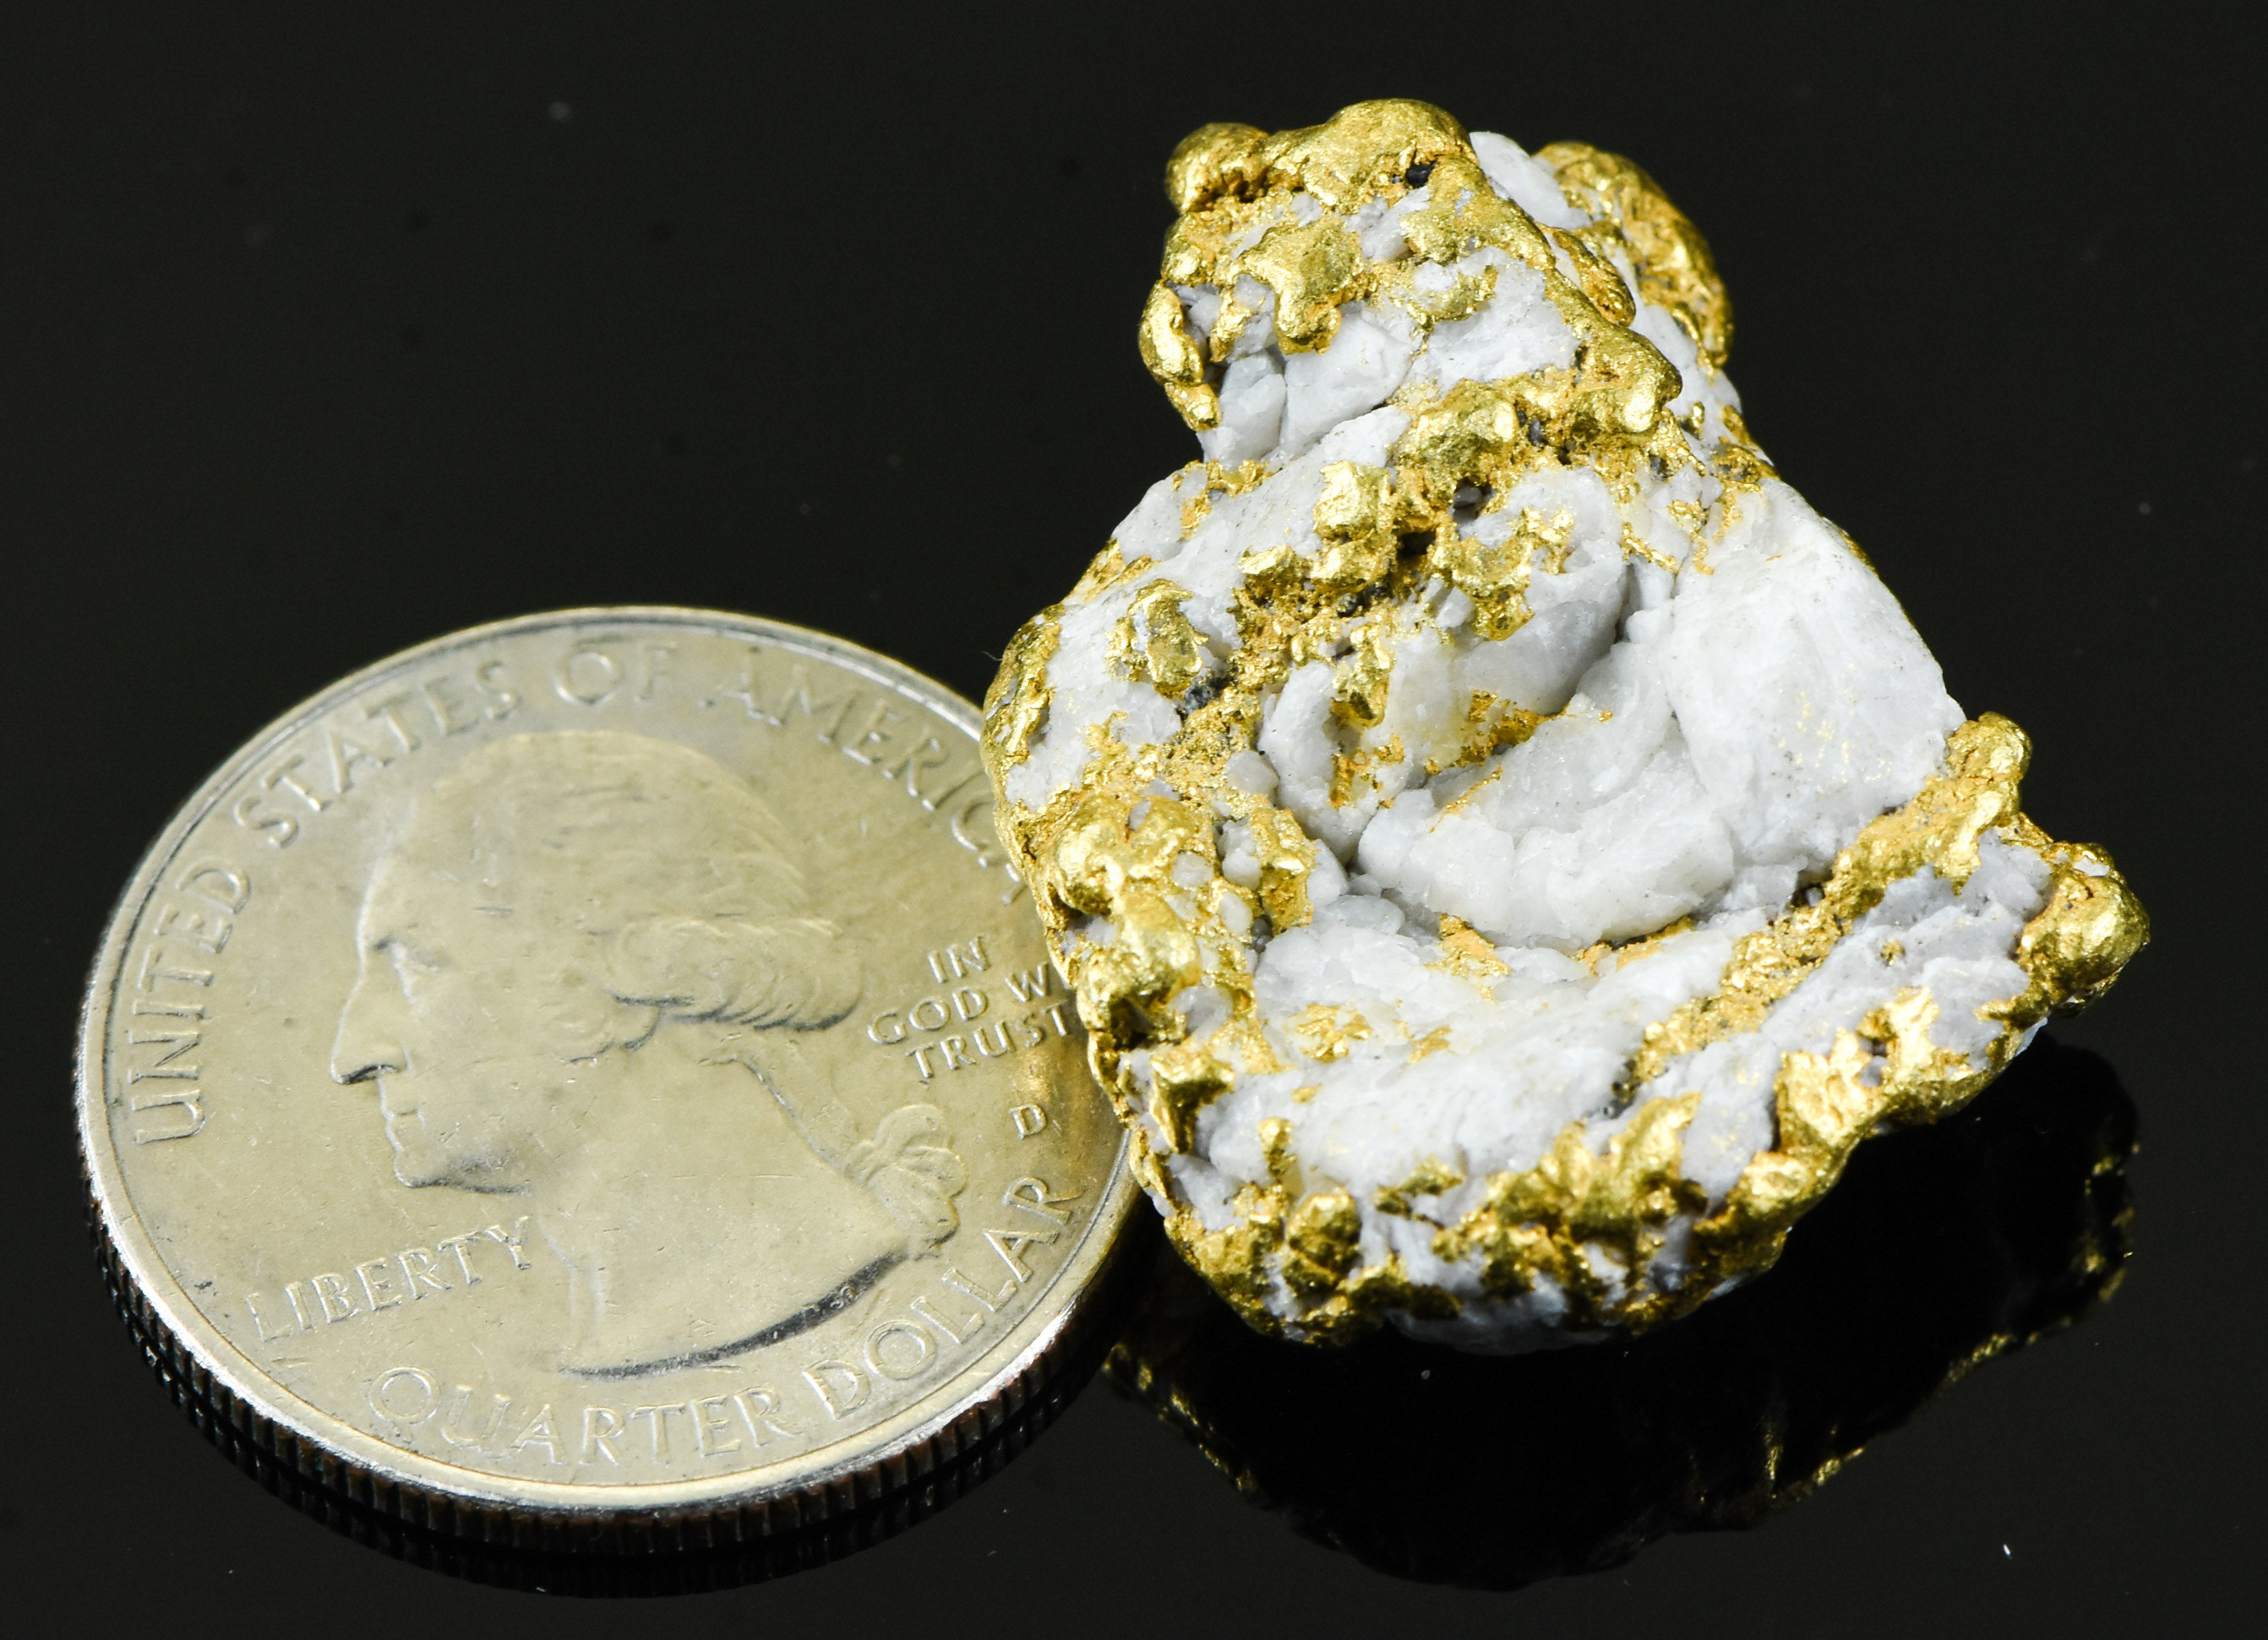 QN-69 "Alaskan BC Gold Nuggets with Quartz" Genuine 25.00 Grams